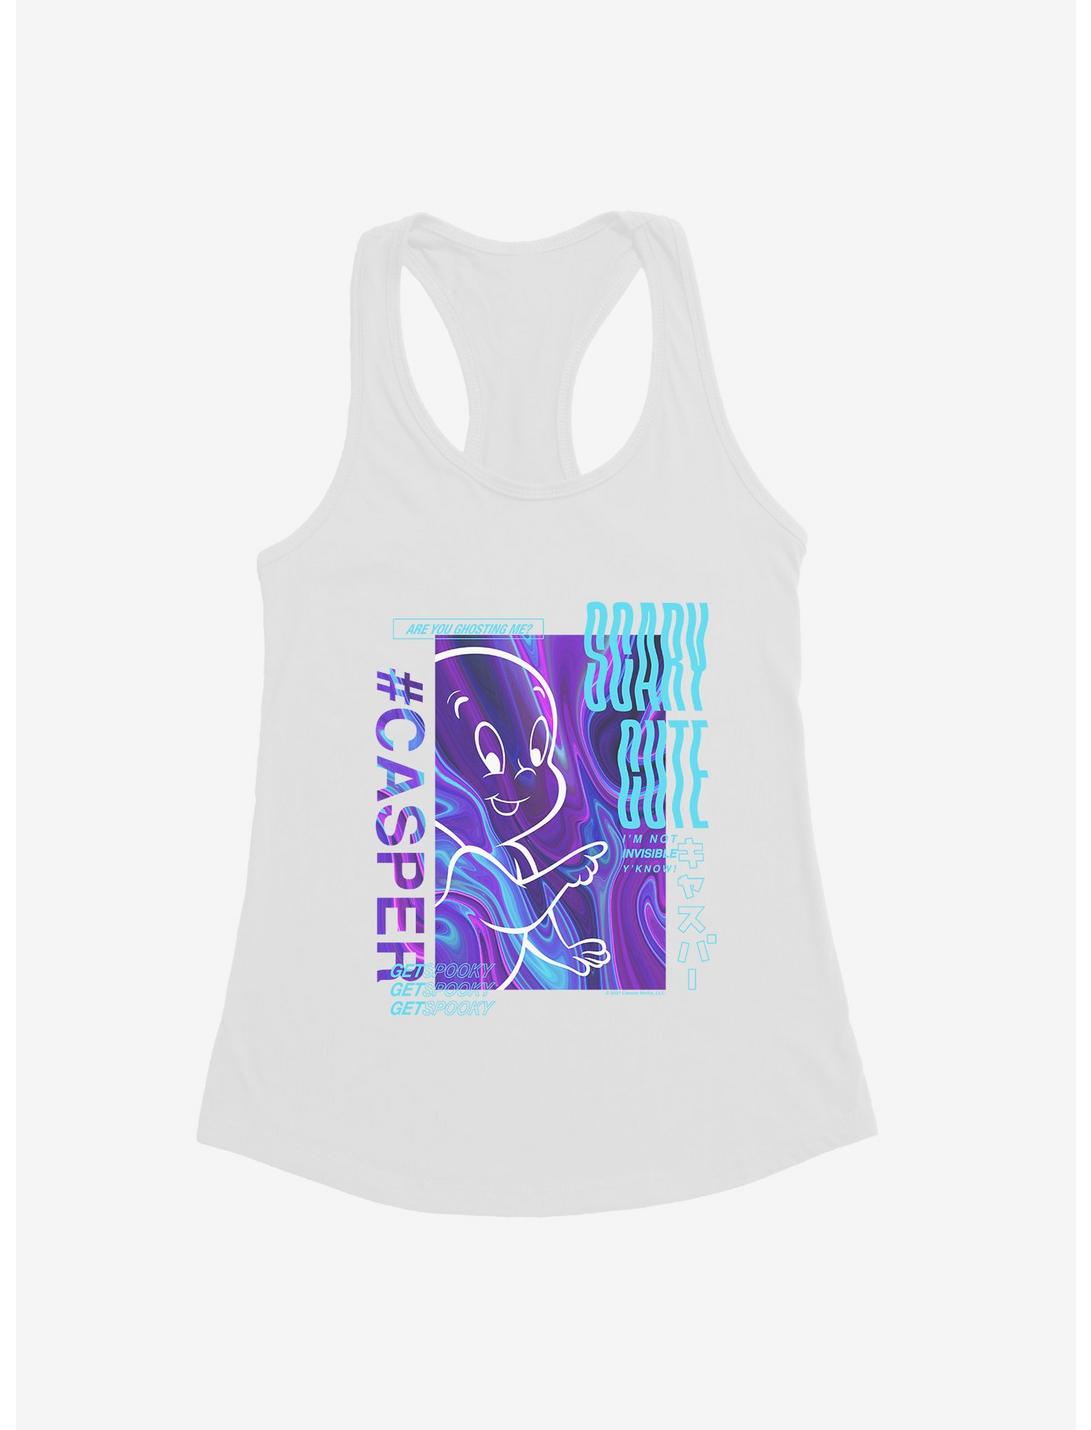 Casper The Friendly Ghost Virtual Raver Scary Cute Girls Tank, WHITE, hi-res